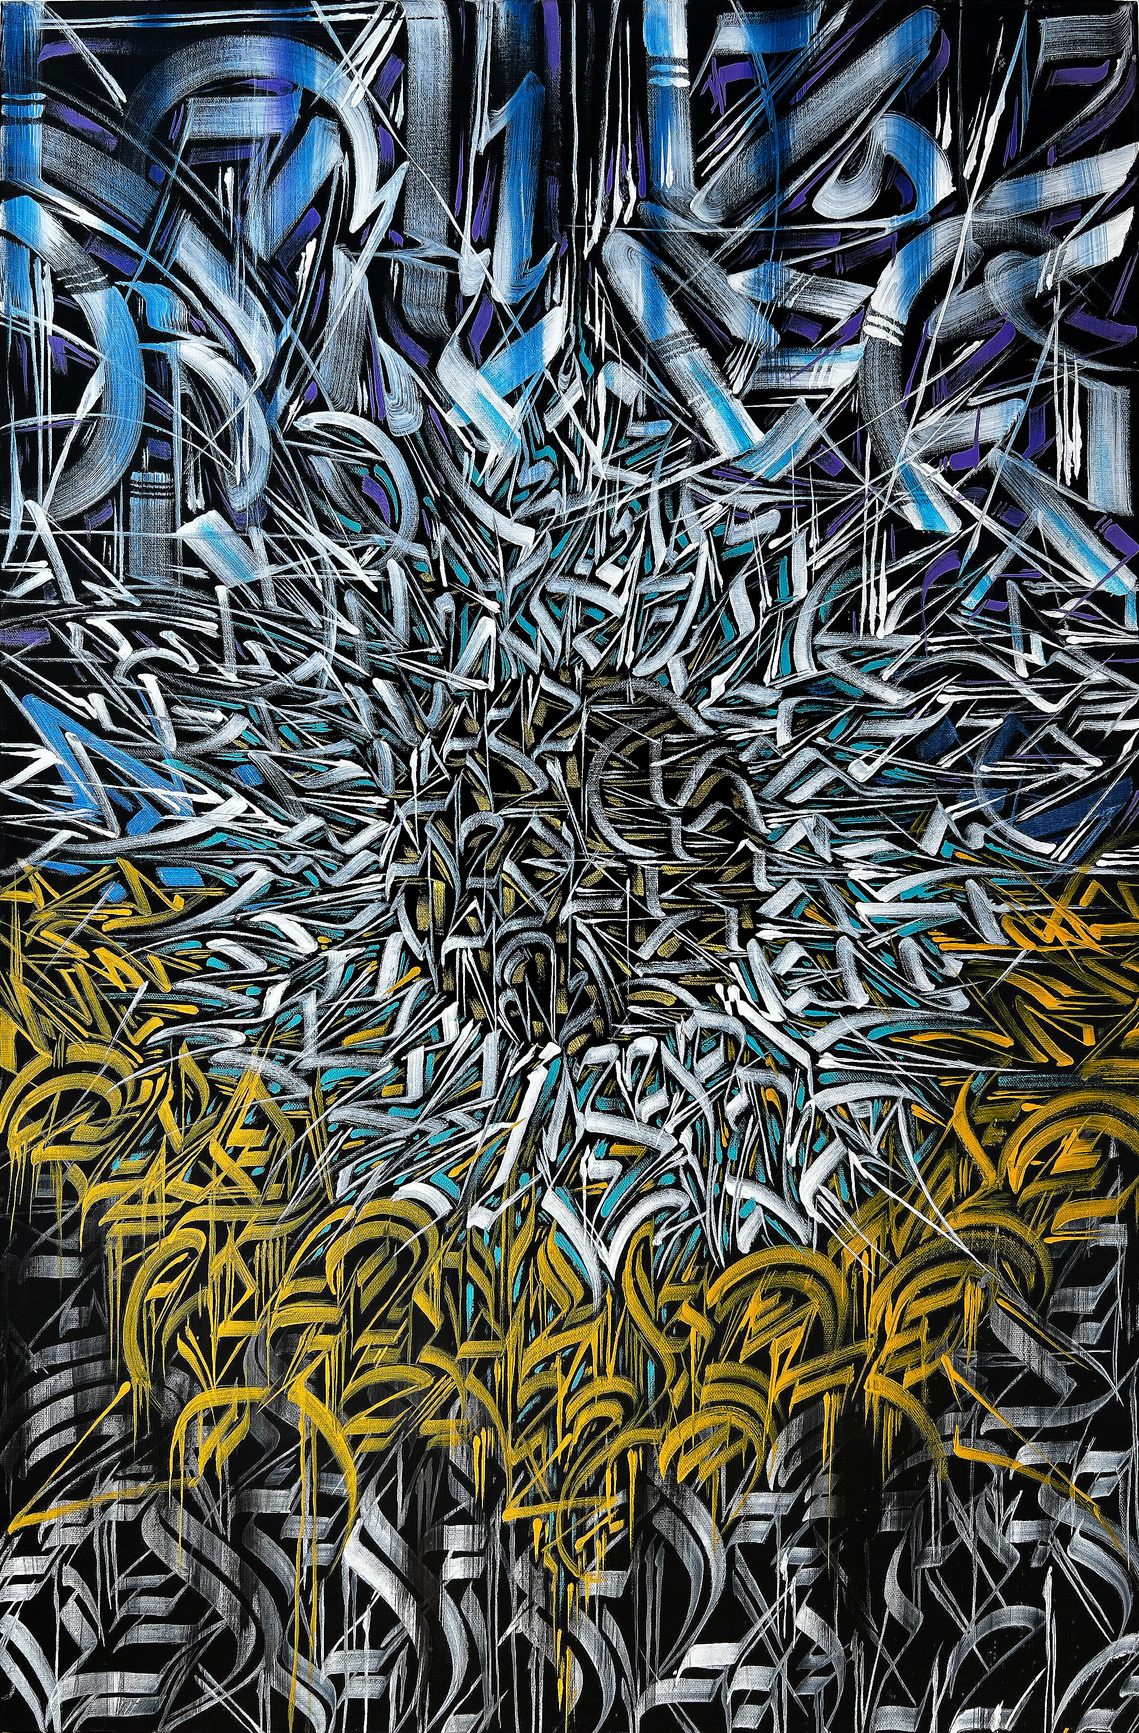 DEFER Iconic Street Art. Los Angeles Art Gallery. Available Art Work. Pioneer of Graffiti.